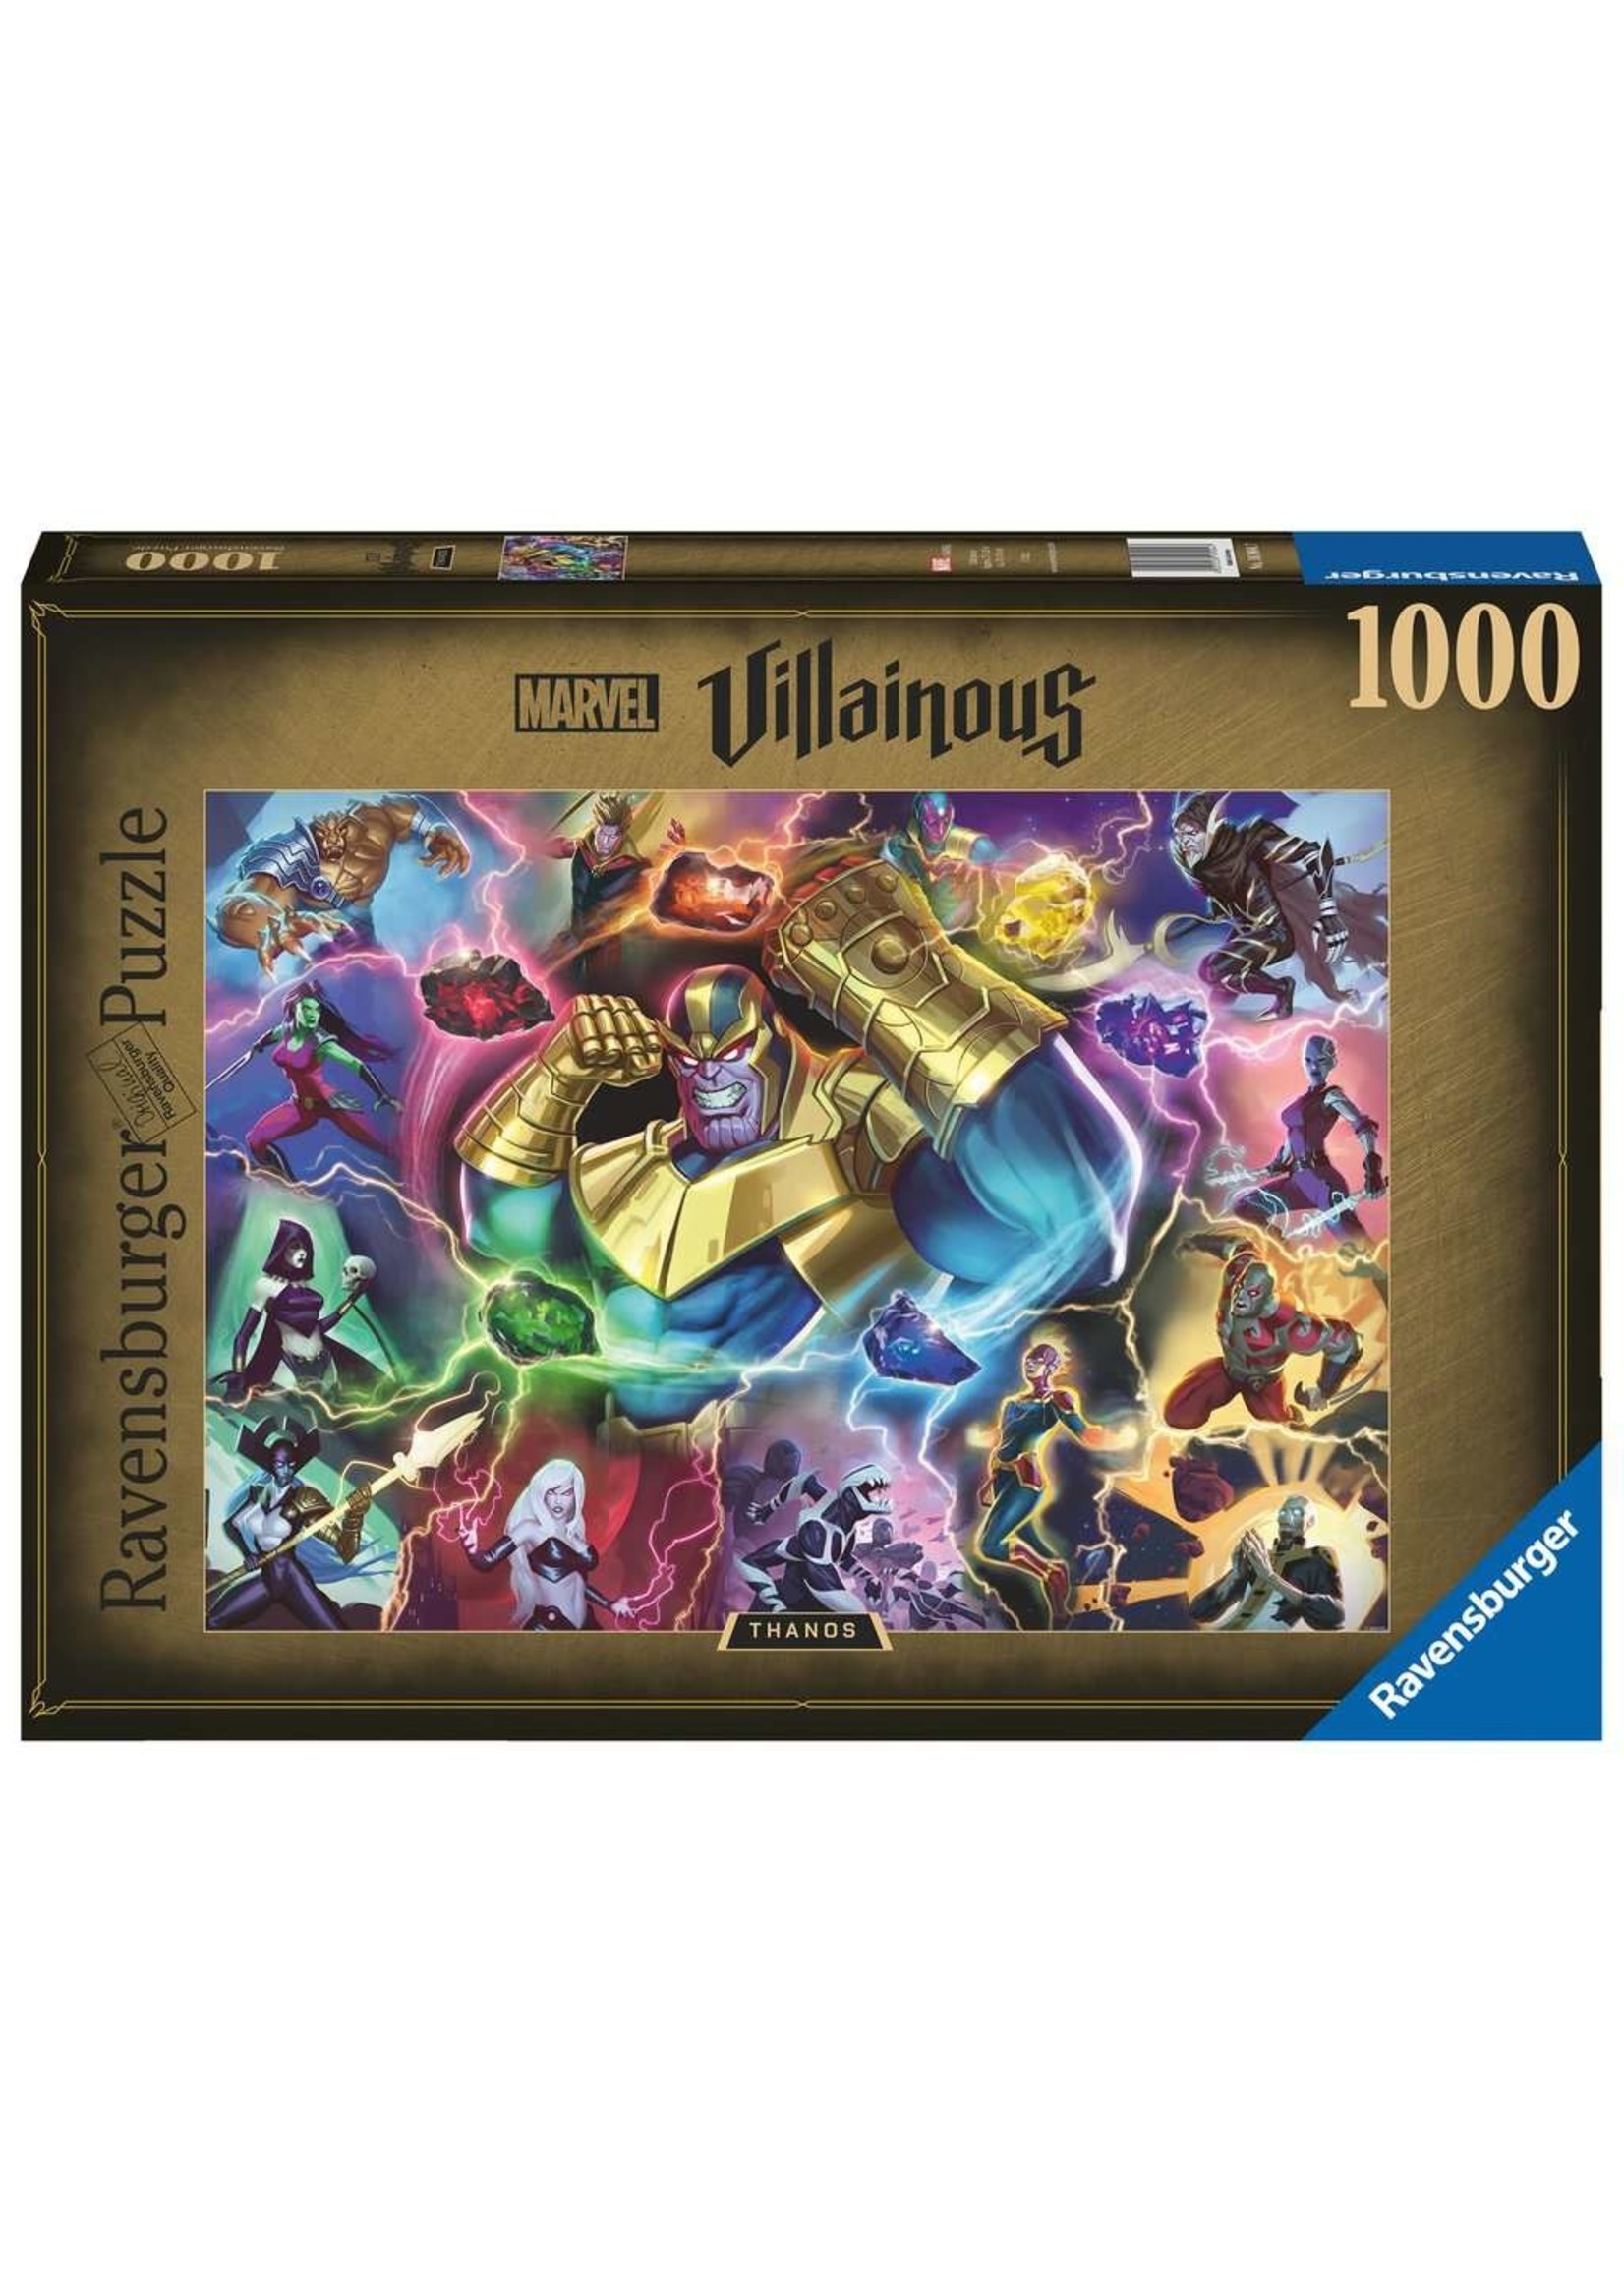 Ravensburger Puzzle Ravensburger 1000 pcs Villainous Marvel - Thanos